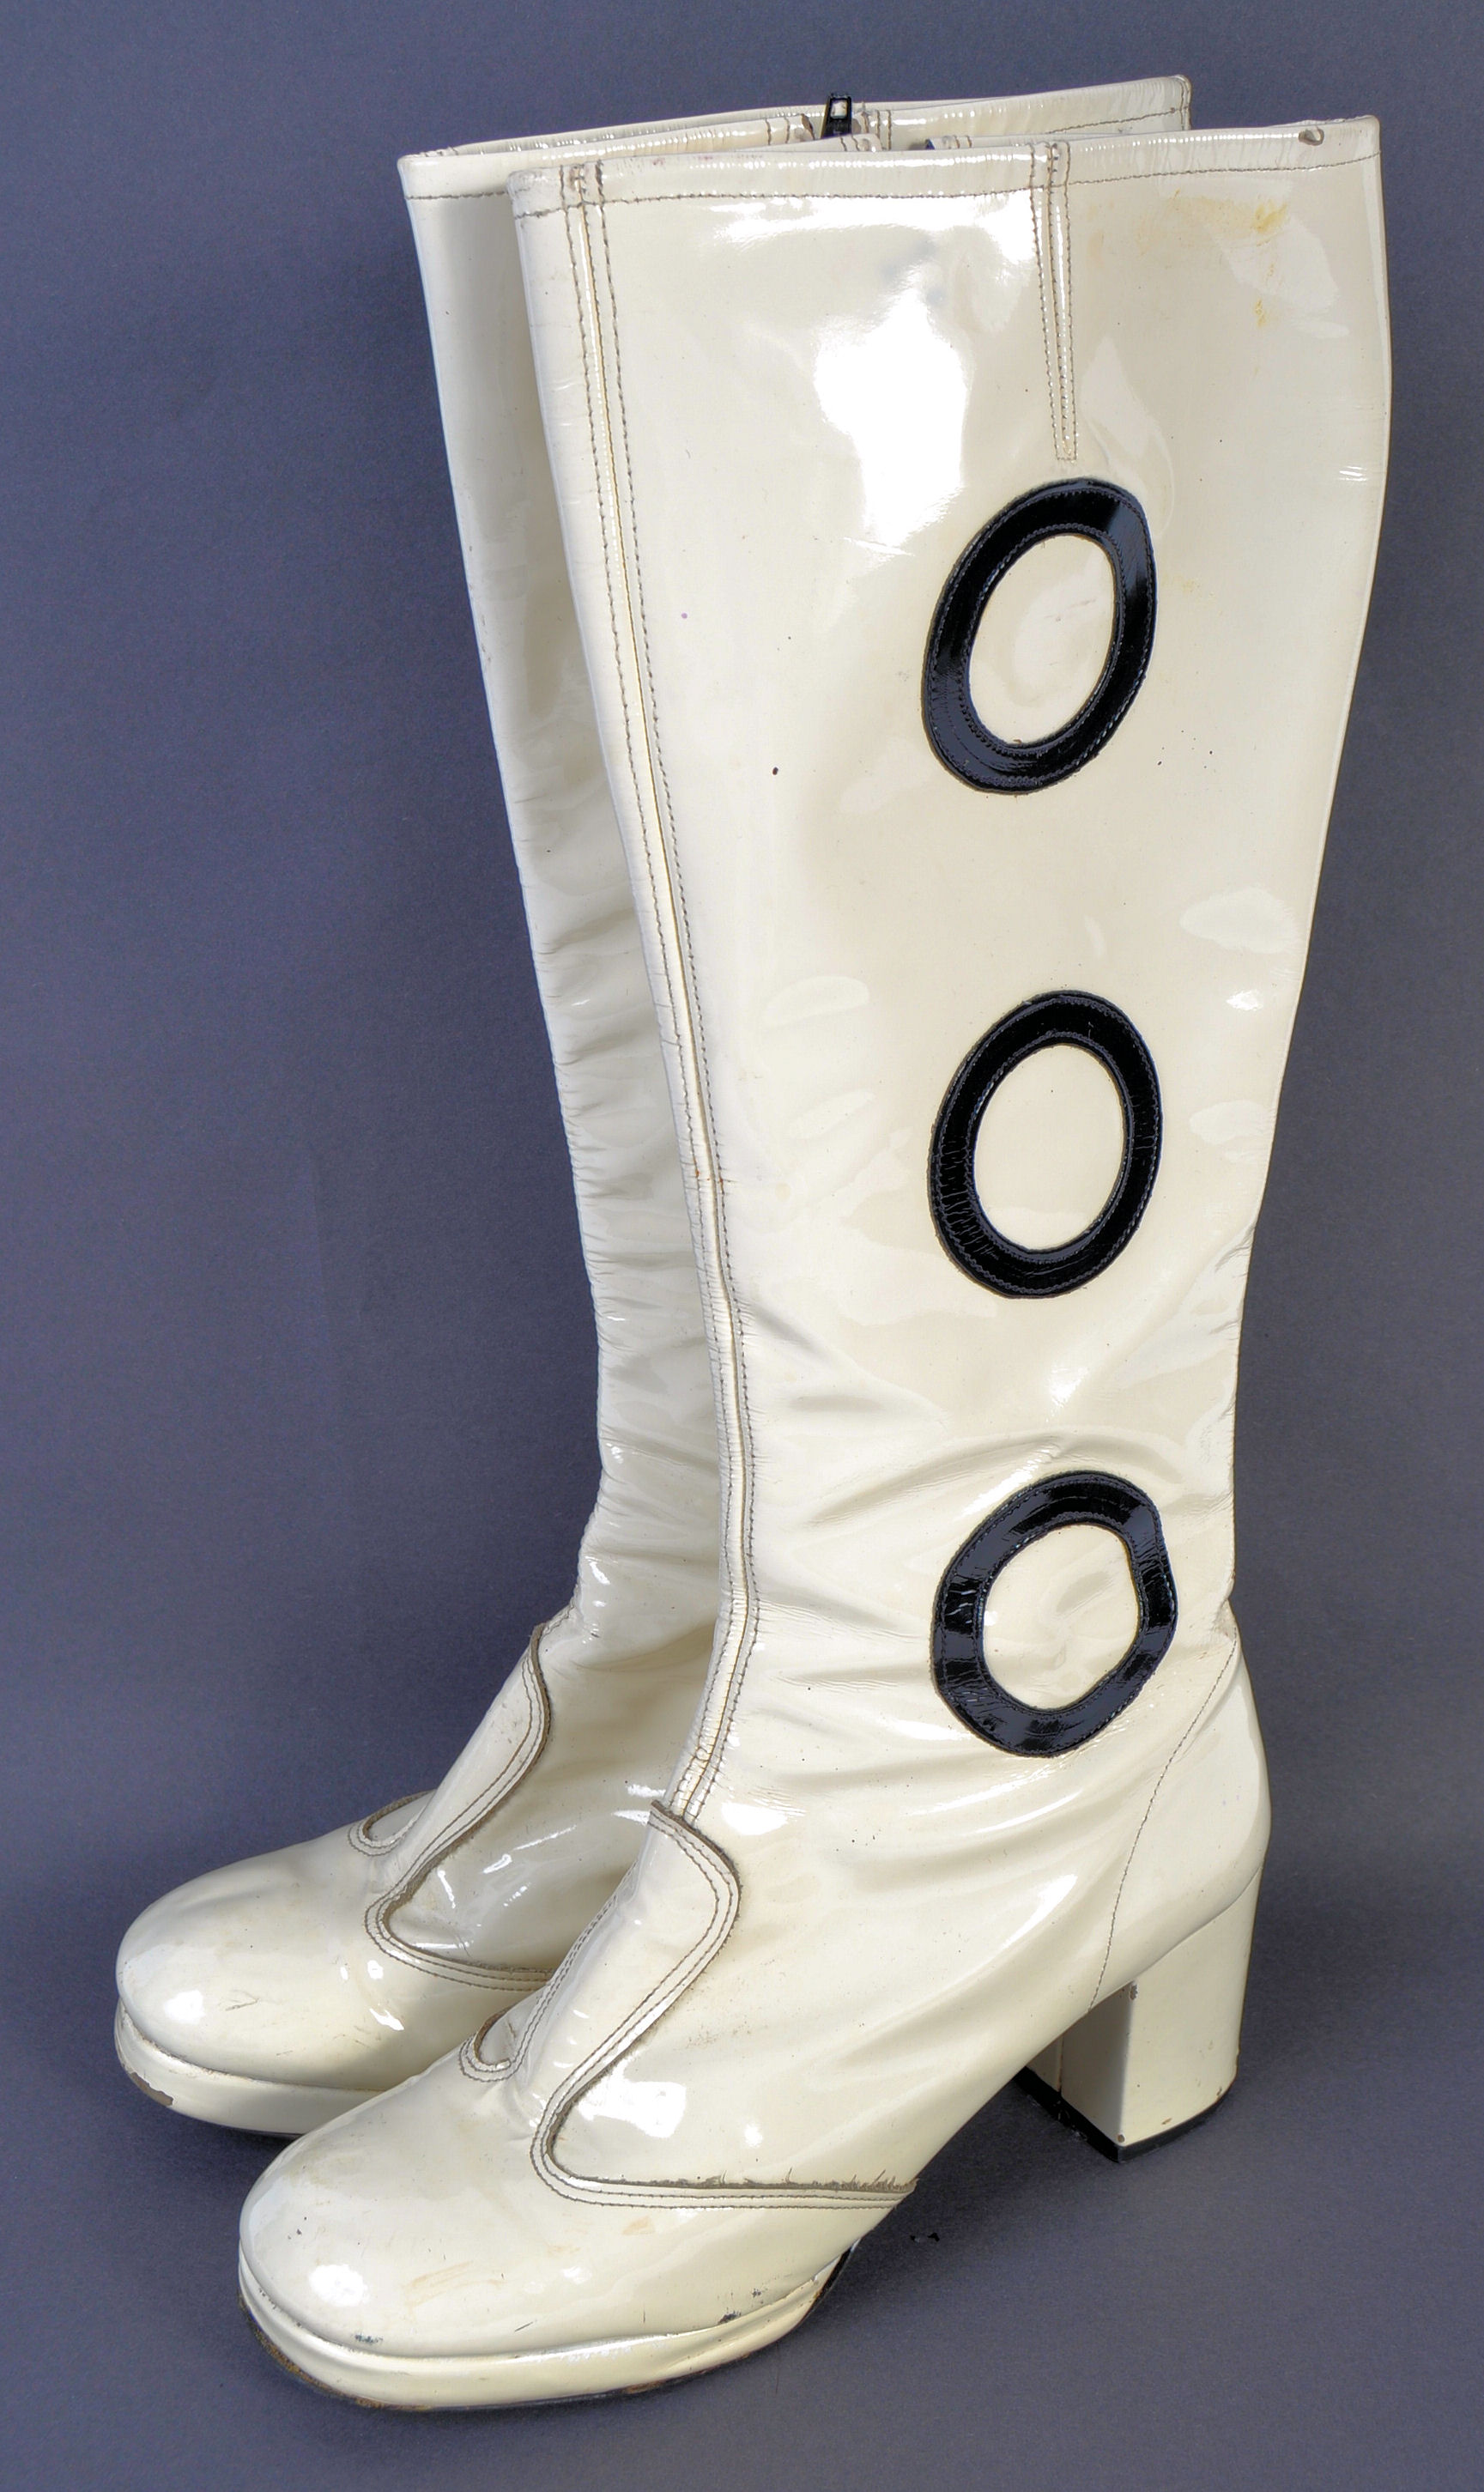 UNIFORMS AND FANCY DRESS - A PAIR OF WHITE RETRO VINATEB 1960S LADIES GOGO BOOTS.